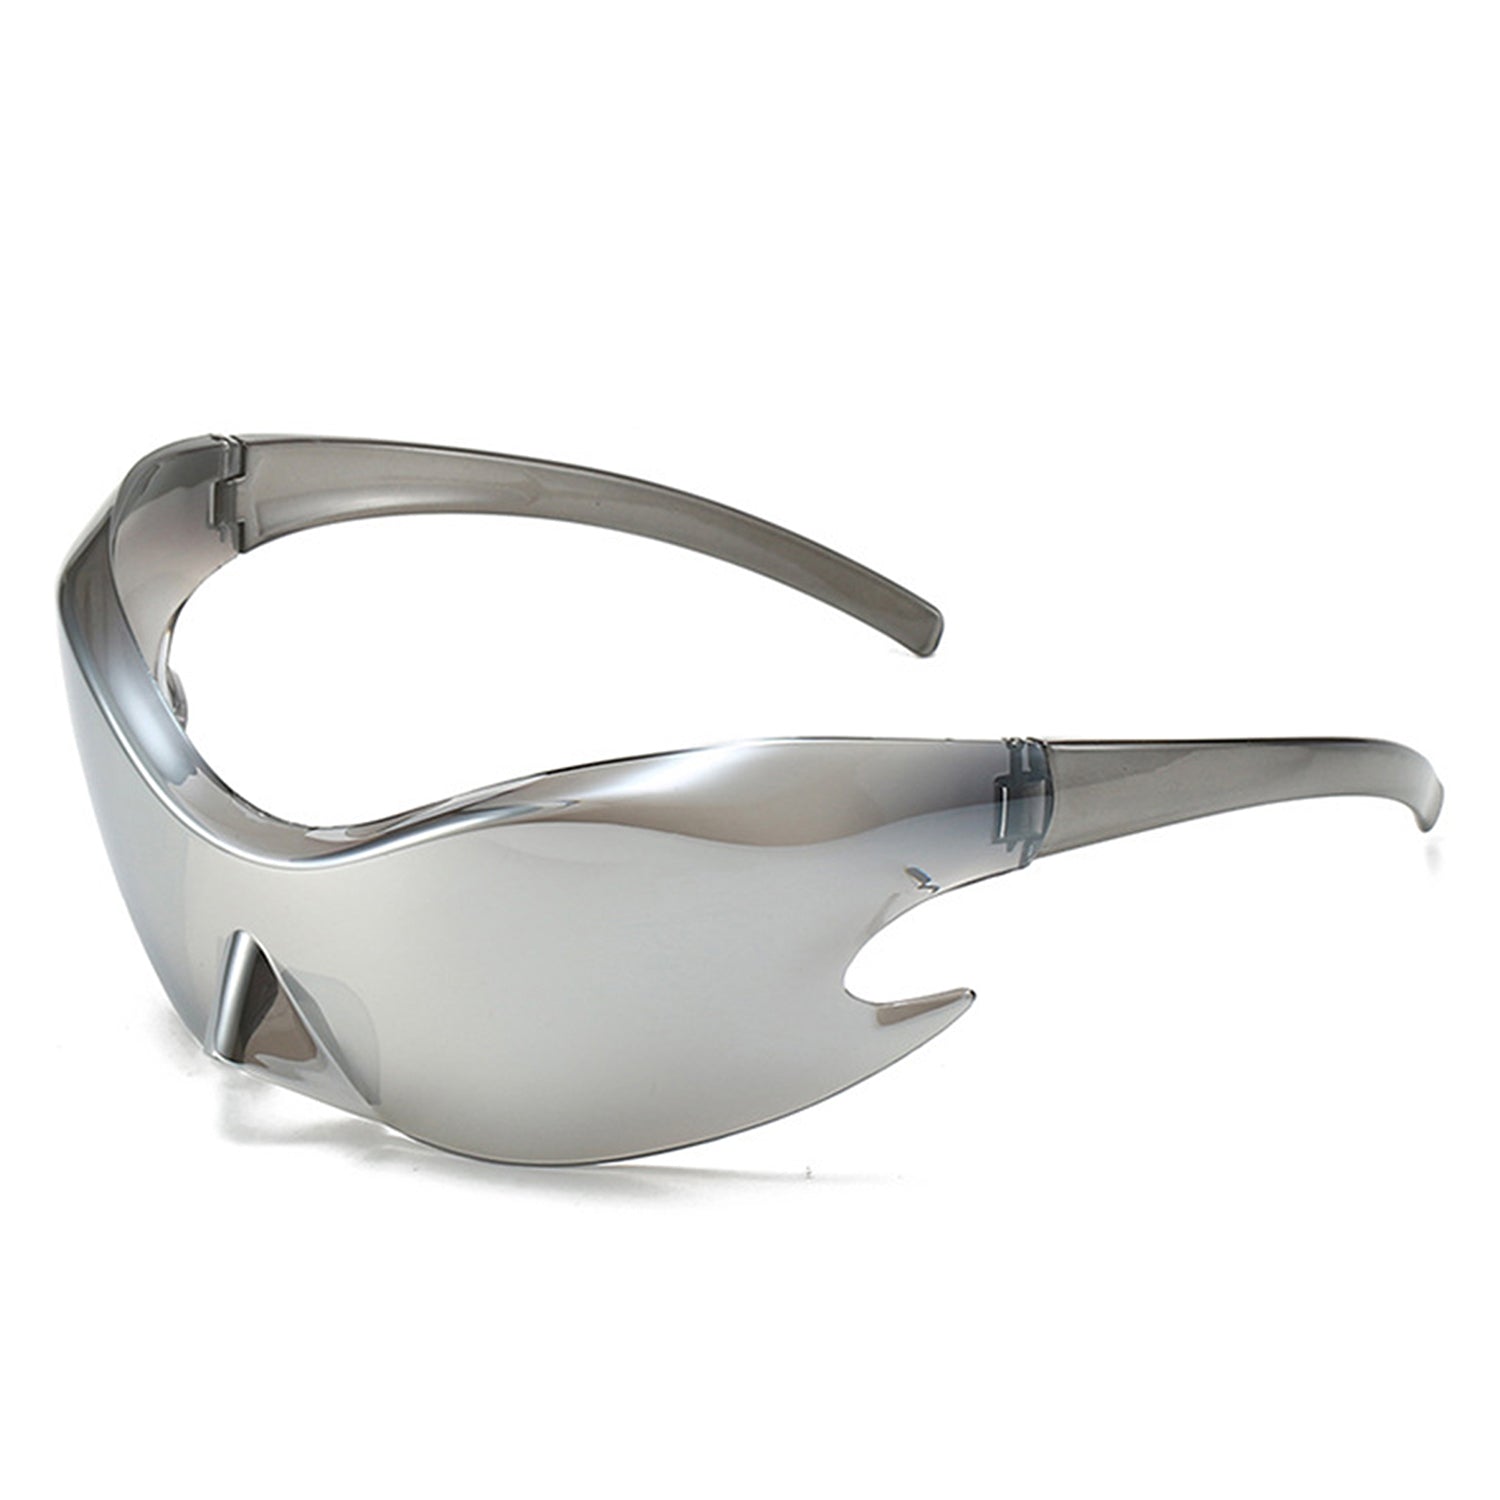 Whiestan - Futuristic Mirrored Sleek Wrap Around Sports Sunglasses Rainbow